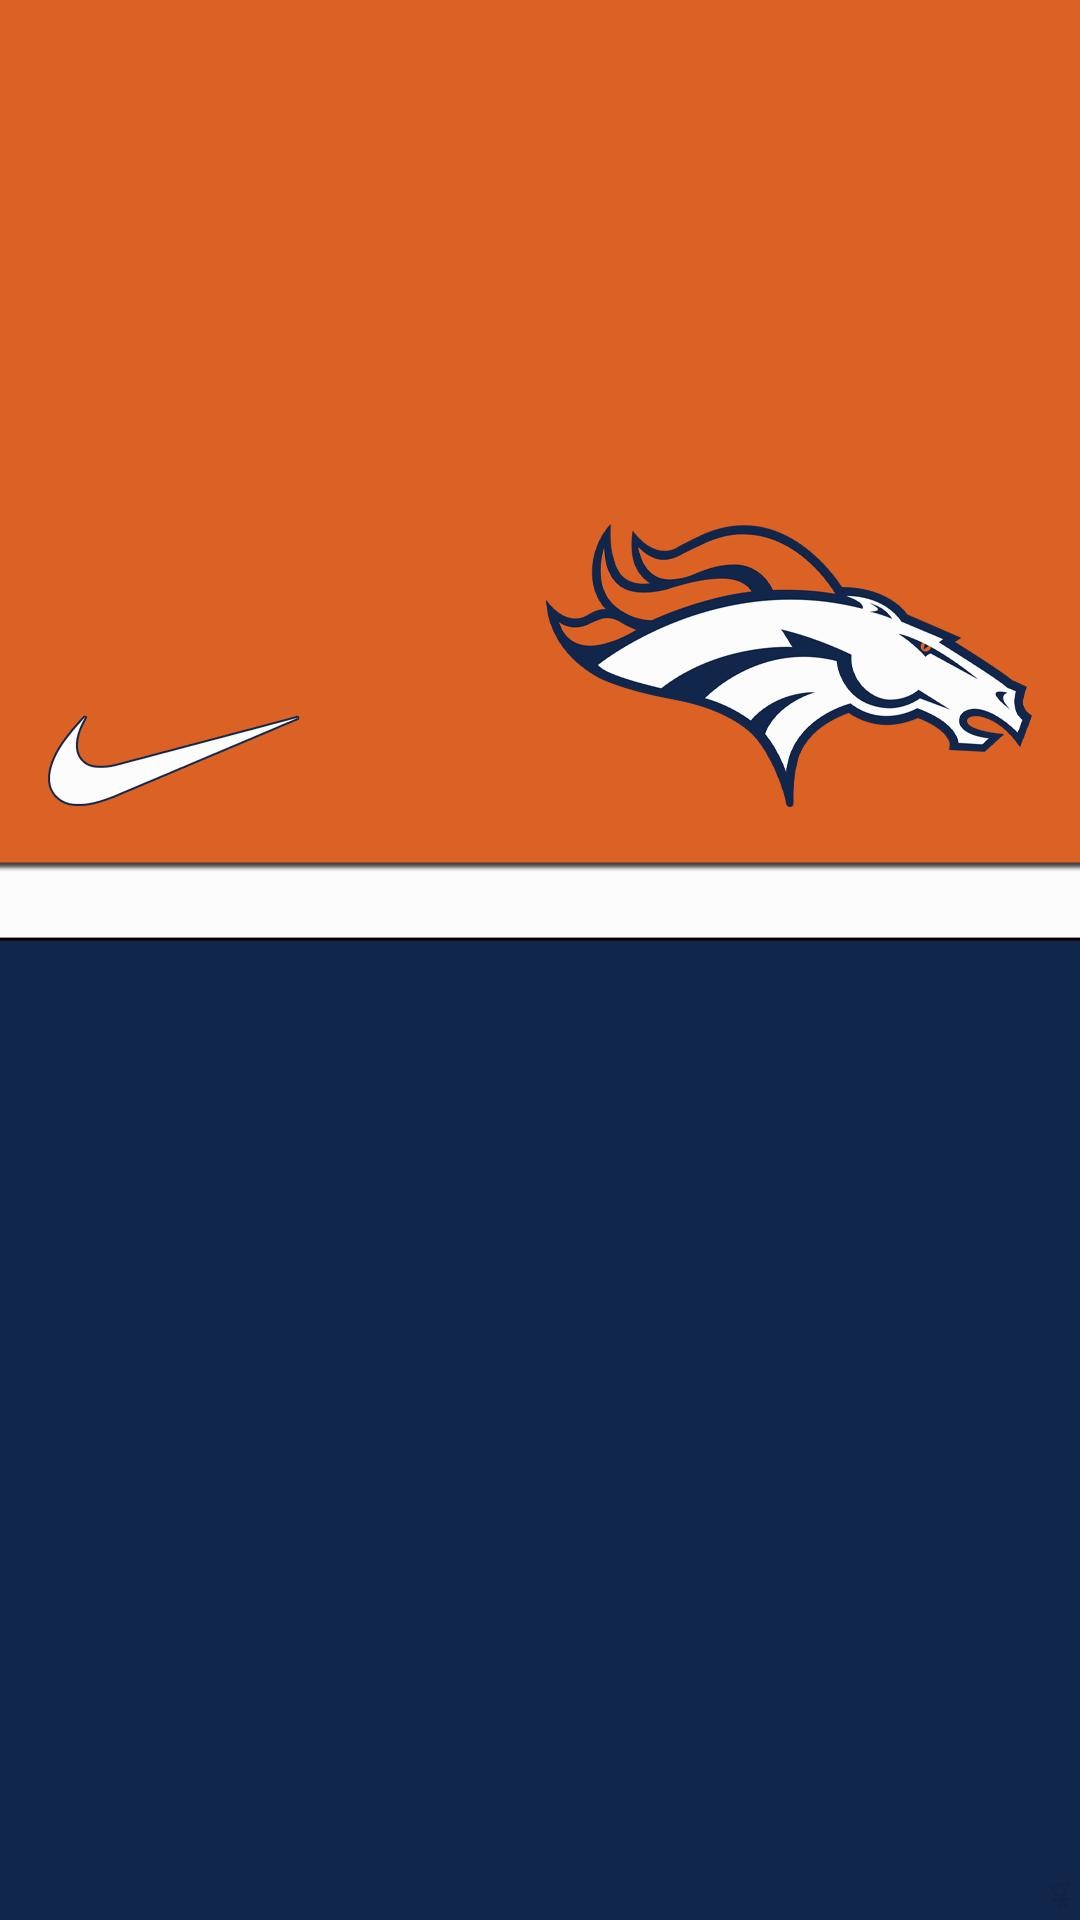 1080x1920 wallpaper.wiki-Denver-Broncos-Nike-Image-for-Iphone-